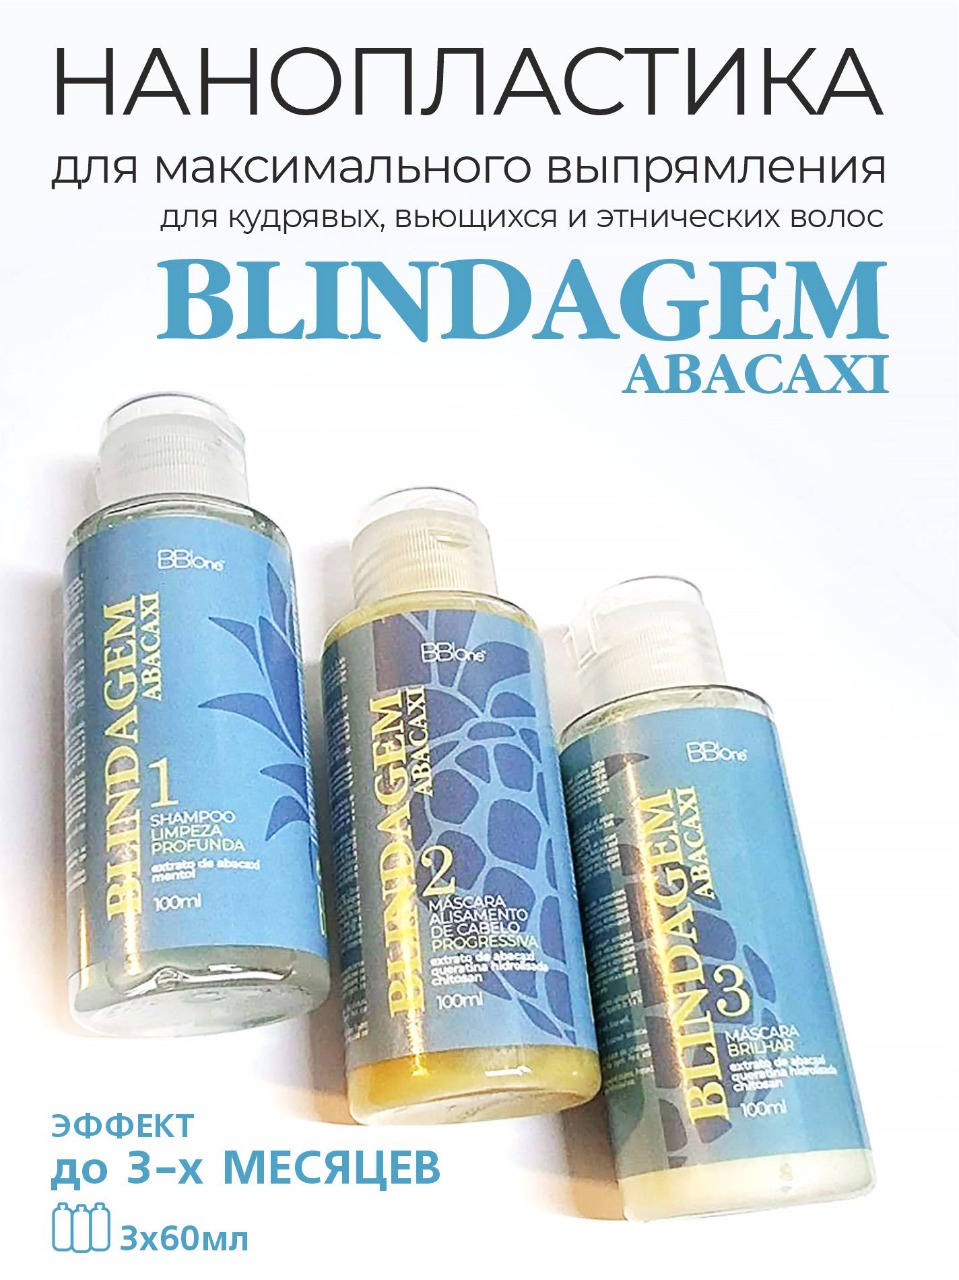 BB one / Набор нанопластика BLINDAGEM Abacaxi 3х100 + масло 30 мл